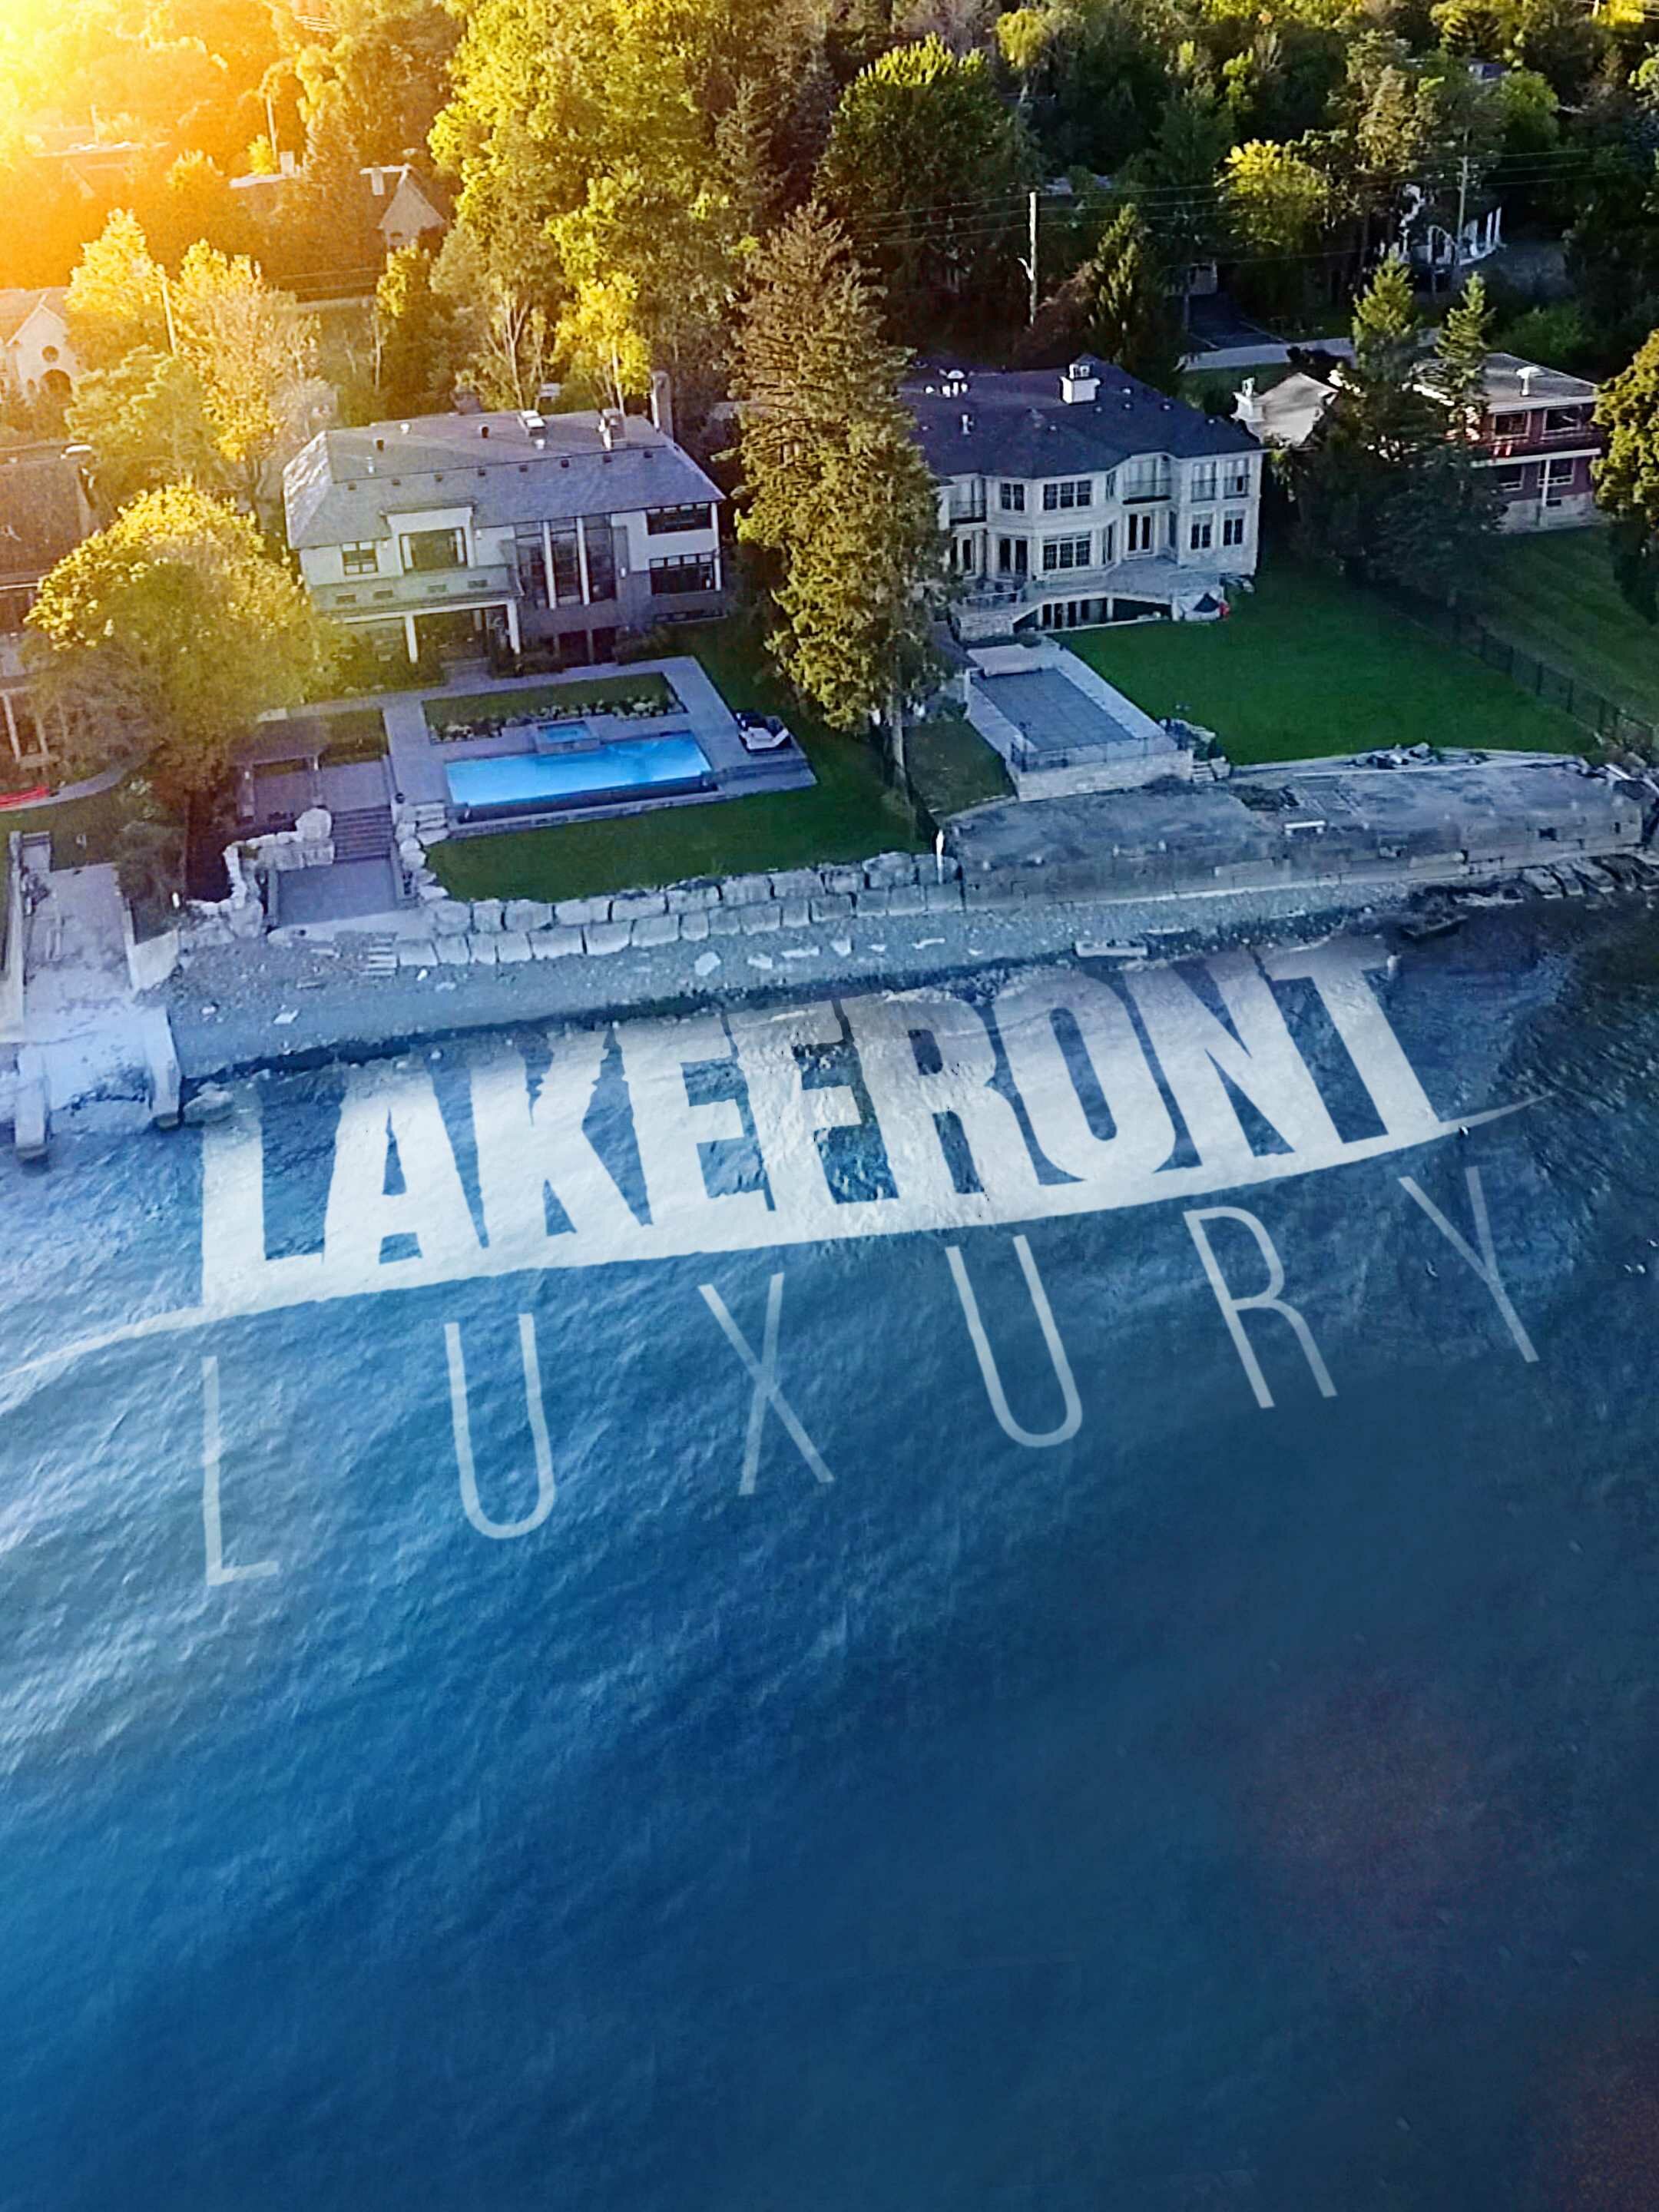 Lakefront Luxury ne zaman